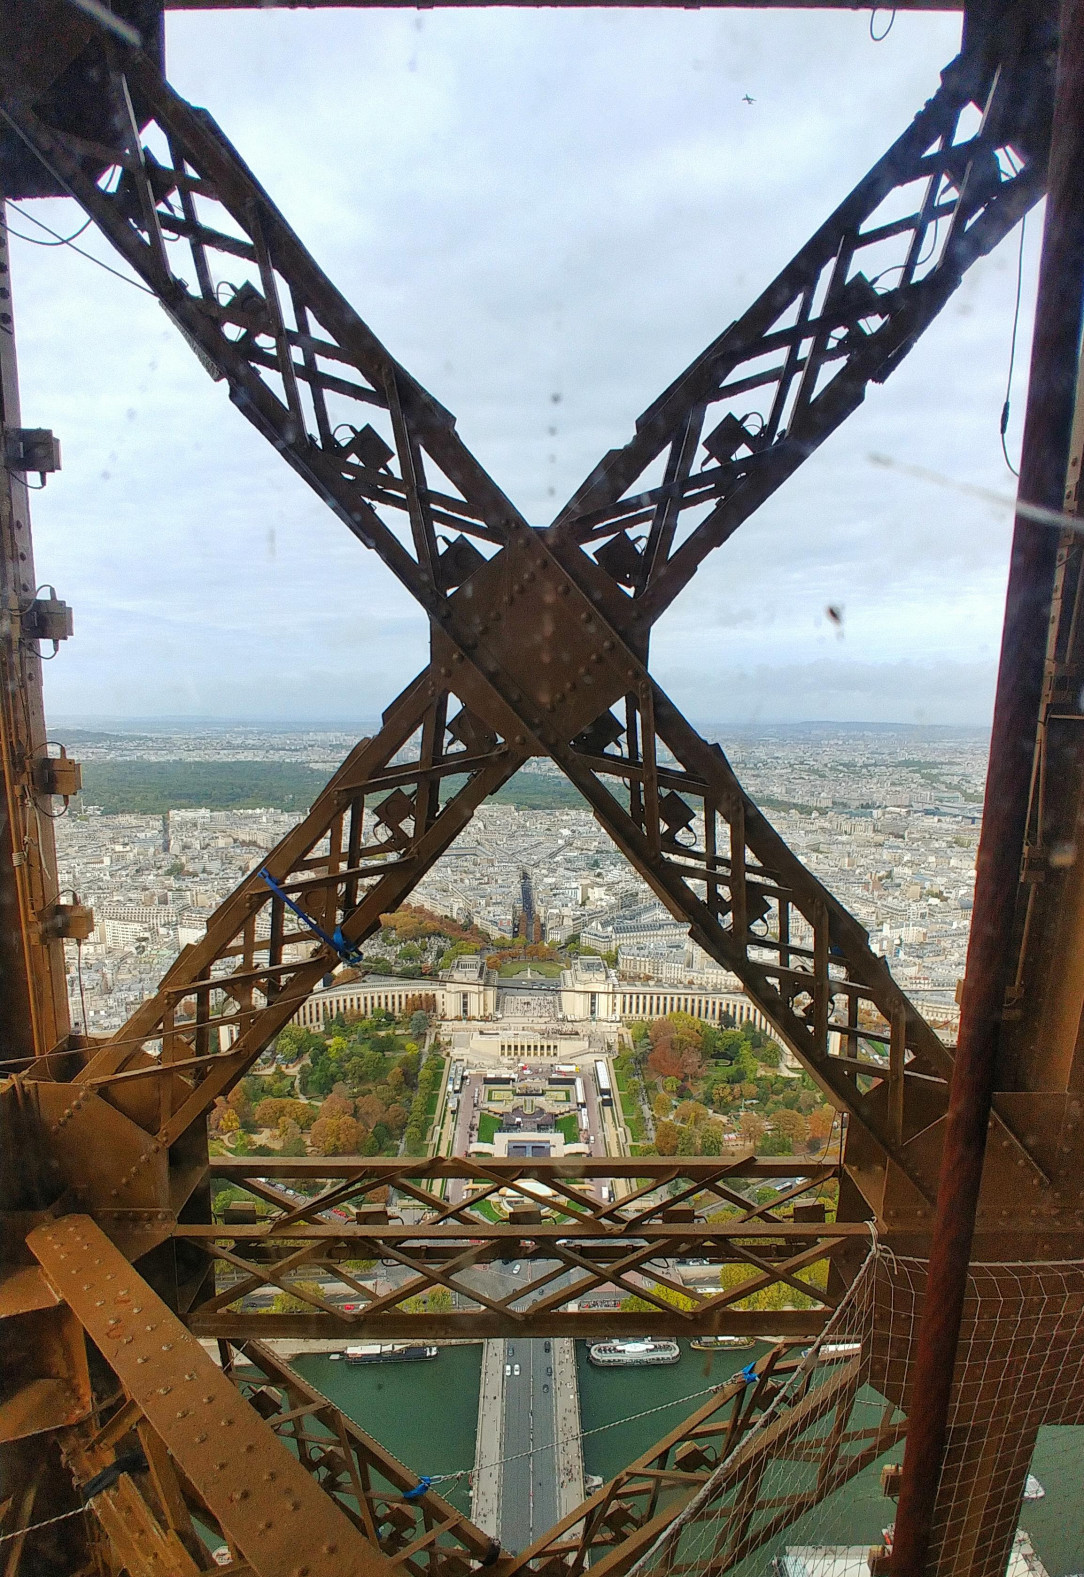 Inside the tower. Eiffel Tower, Paris